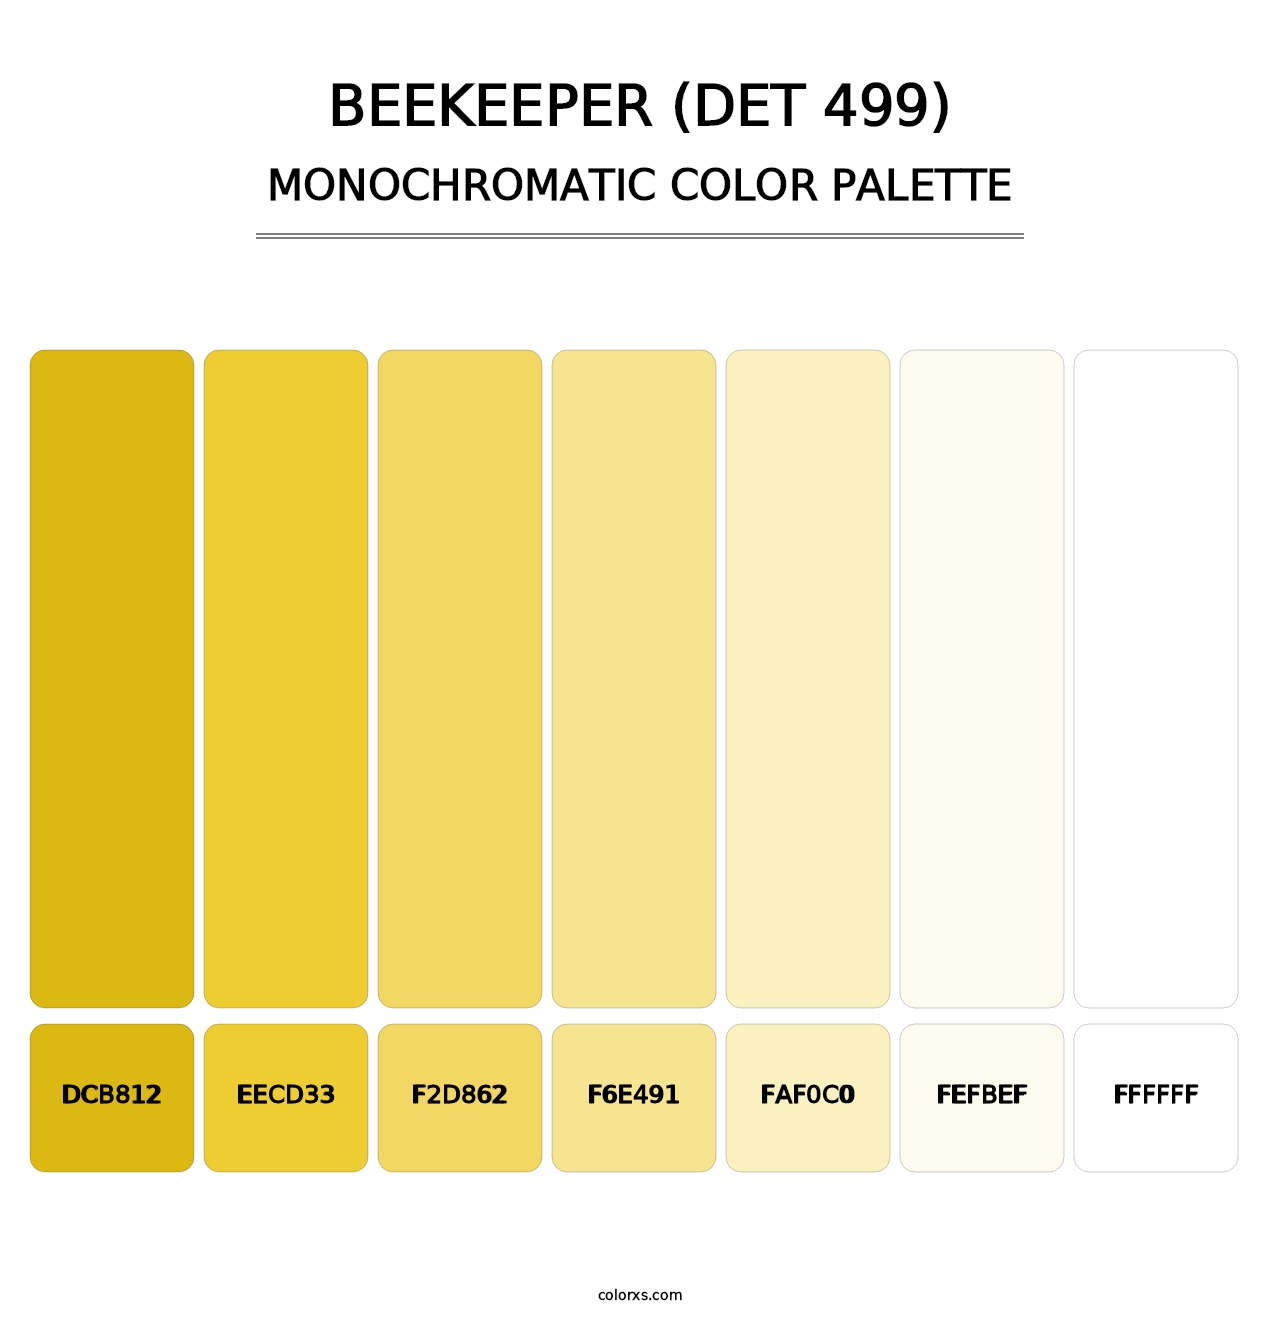 Beekeeper (DET 499) - Monochromatic Color Palette